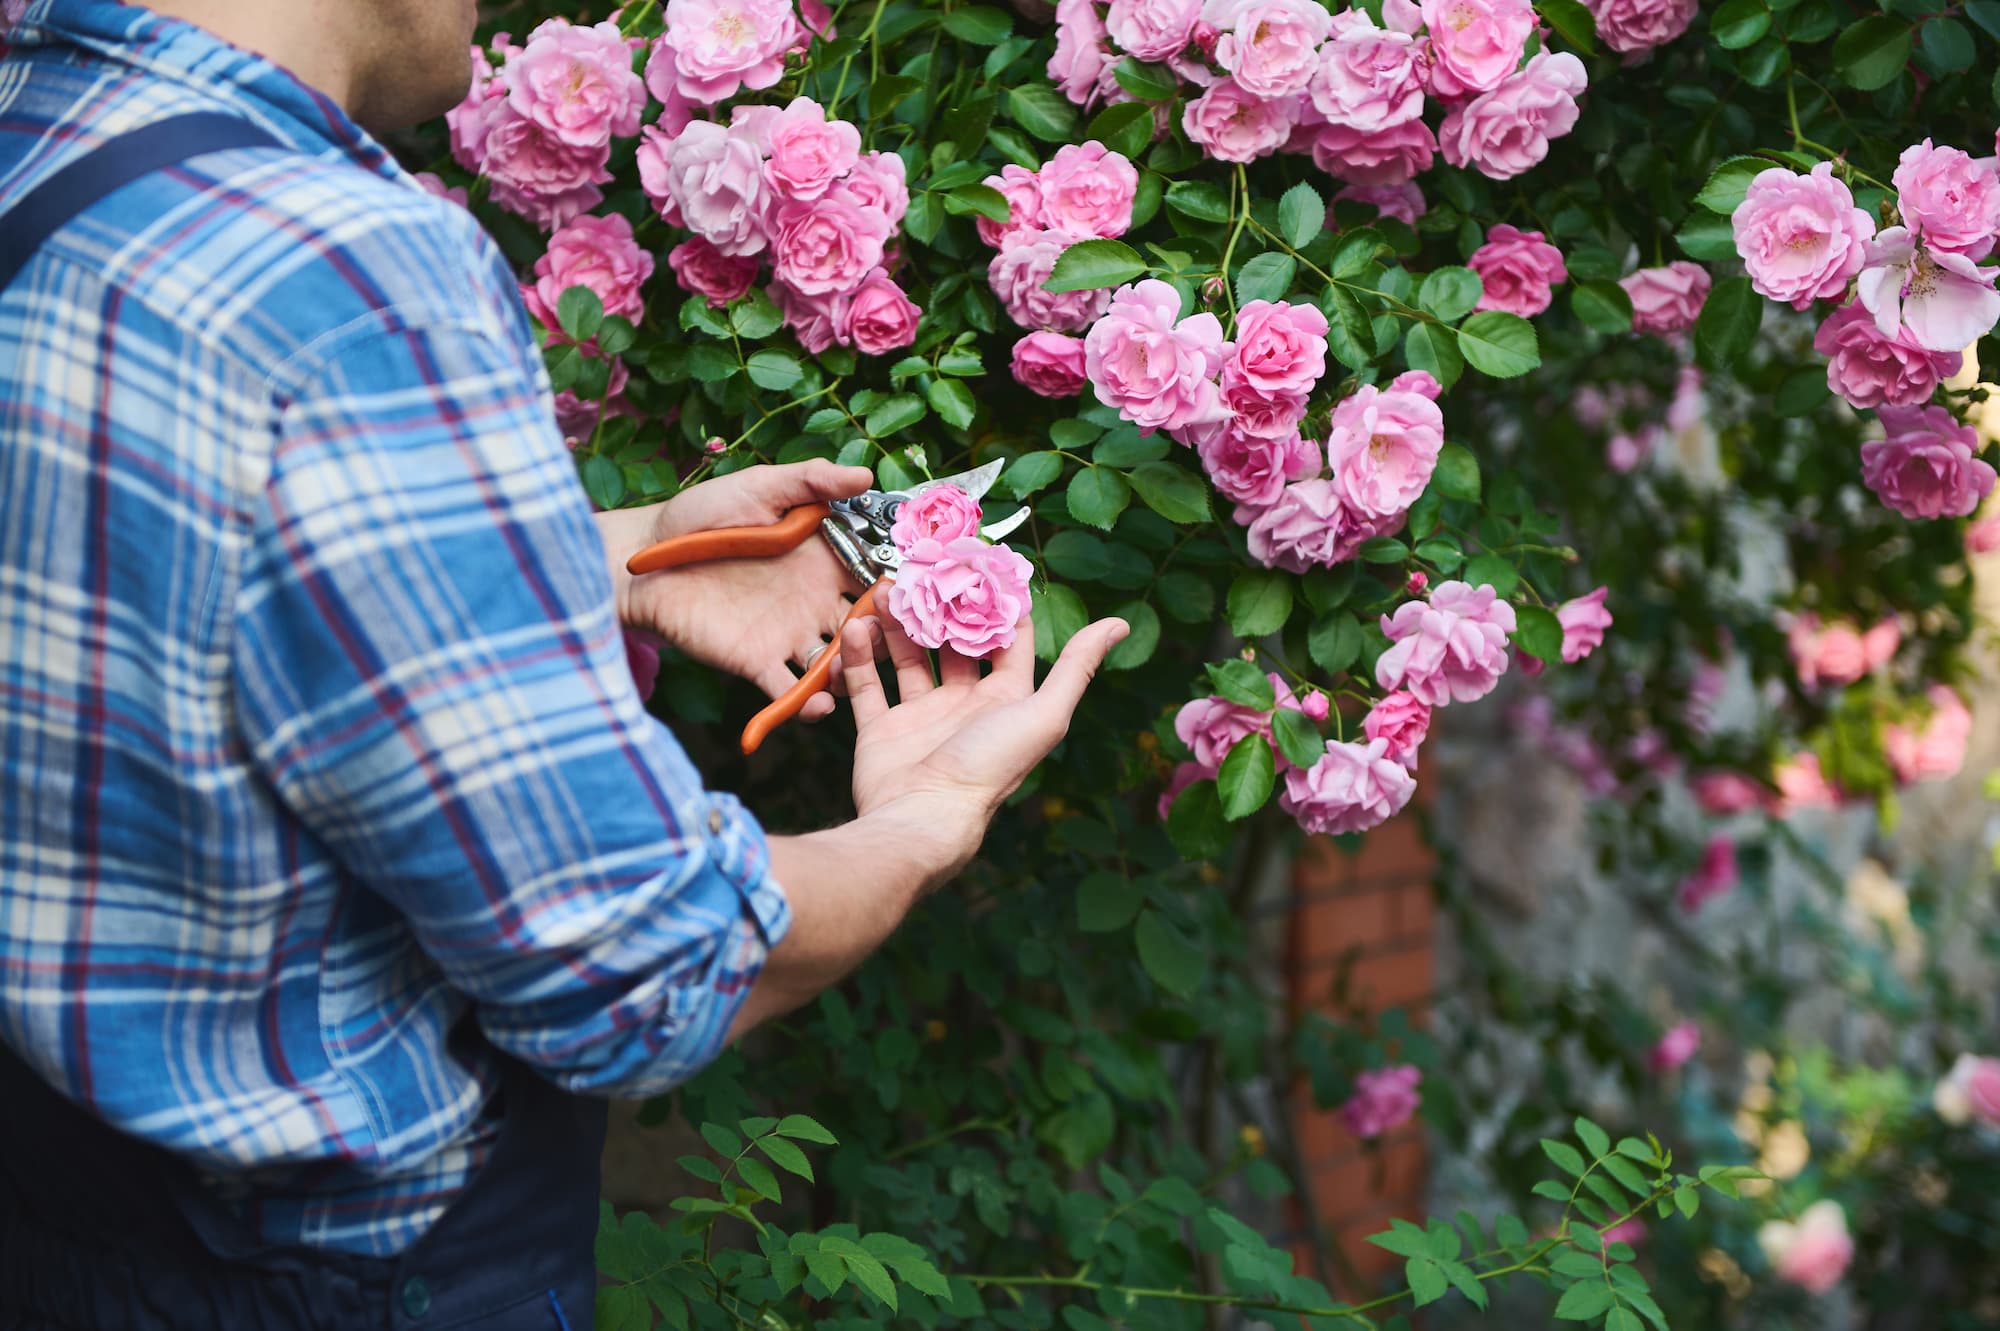 Grand rosier buissonnant dans un jardin luxuriant – Aveve